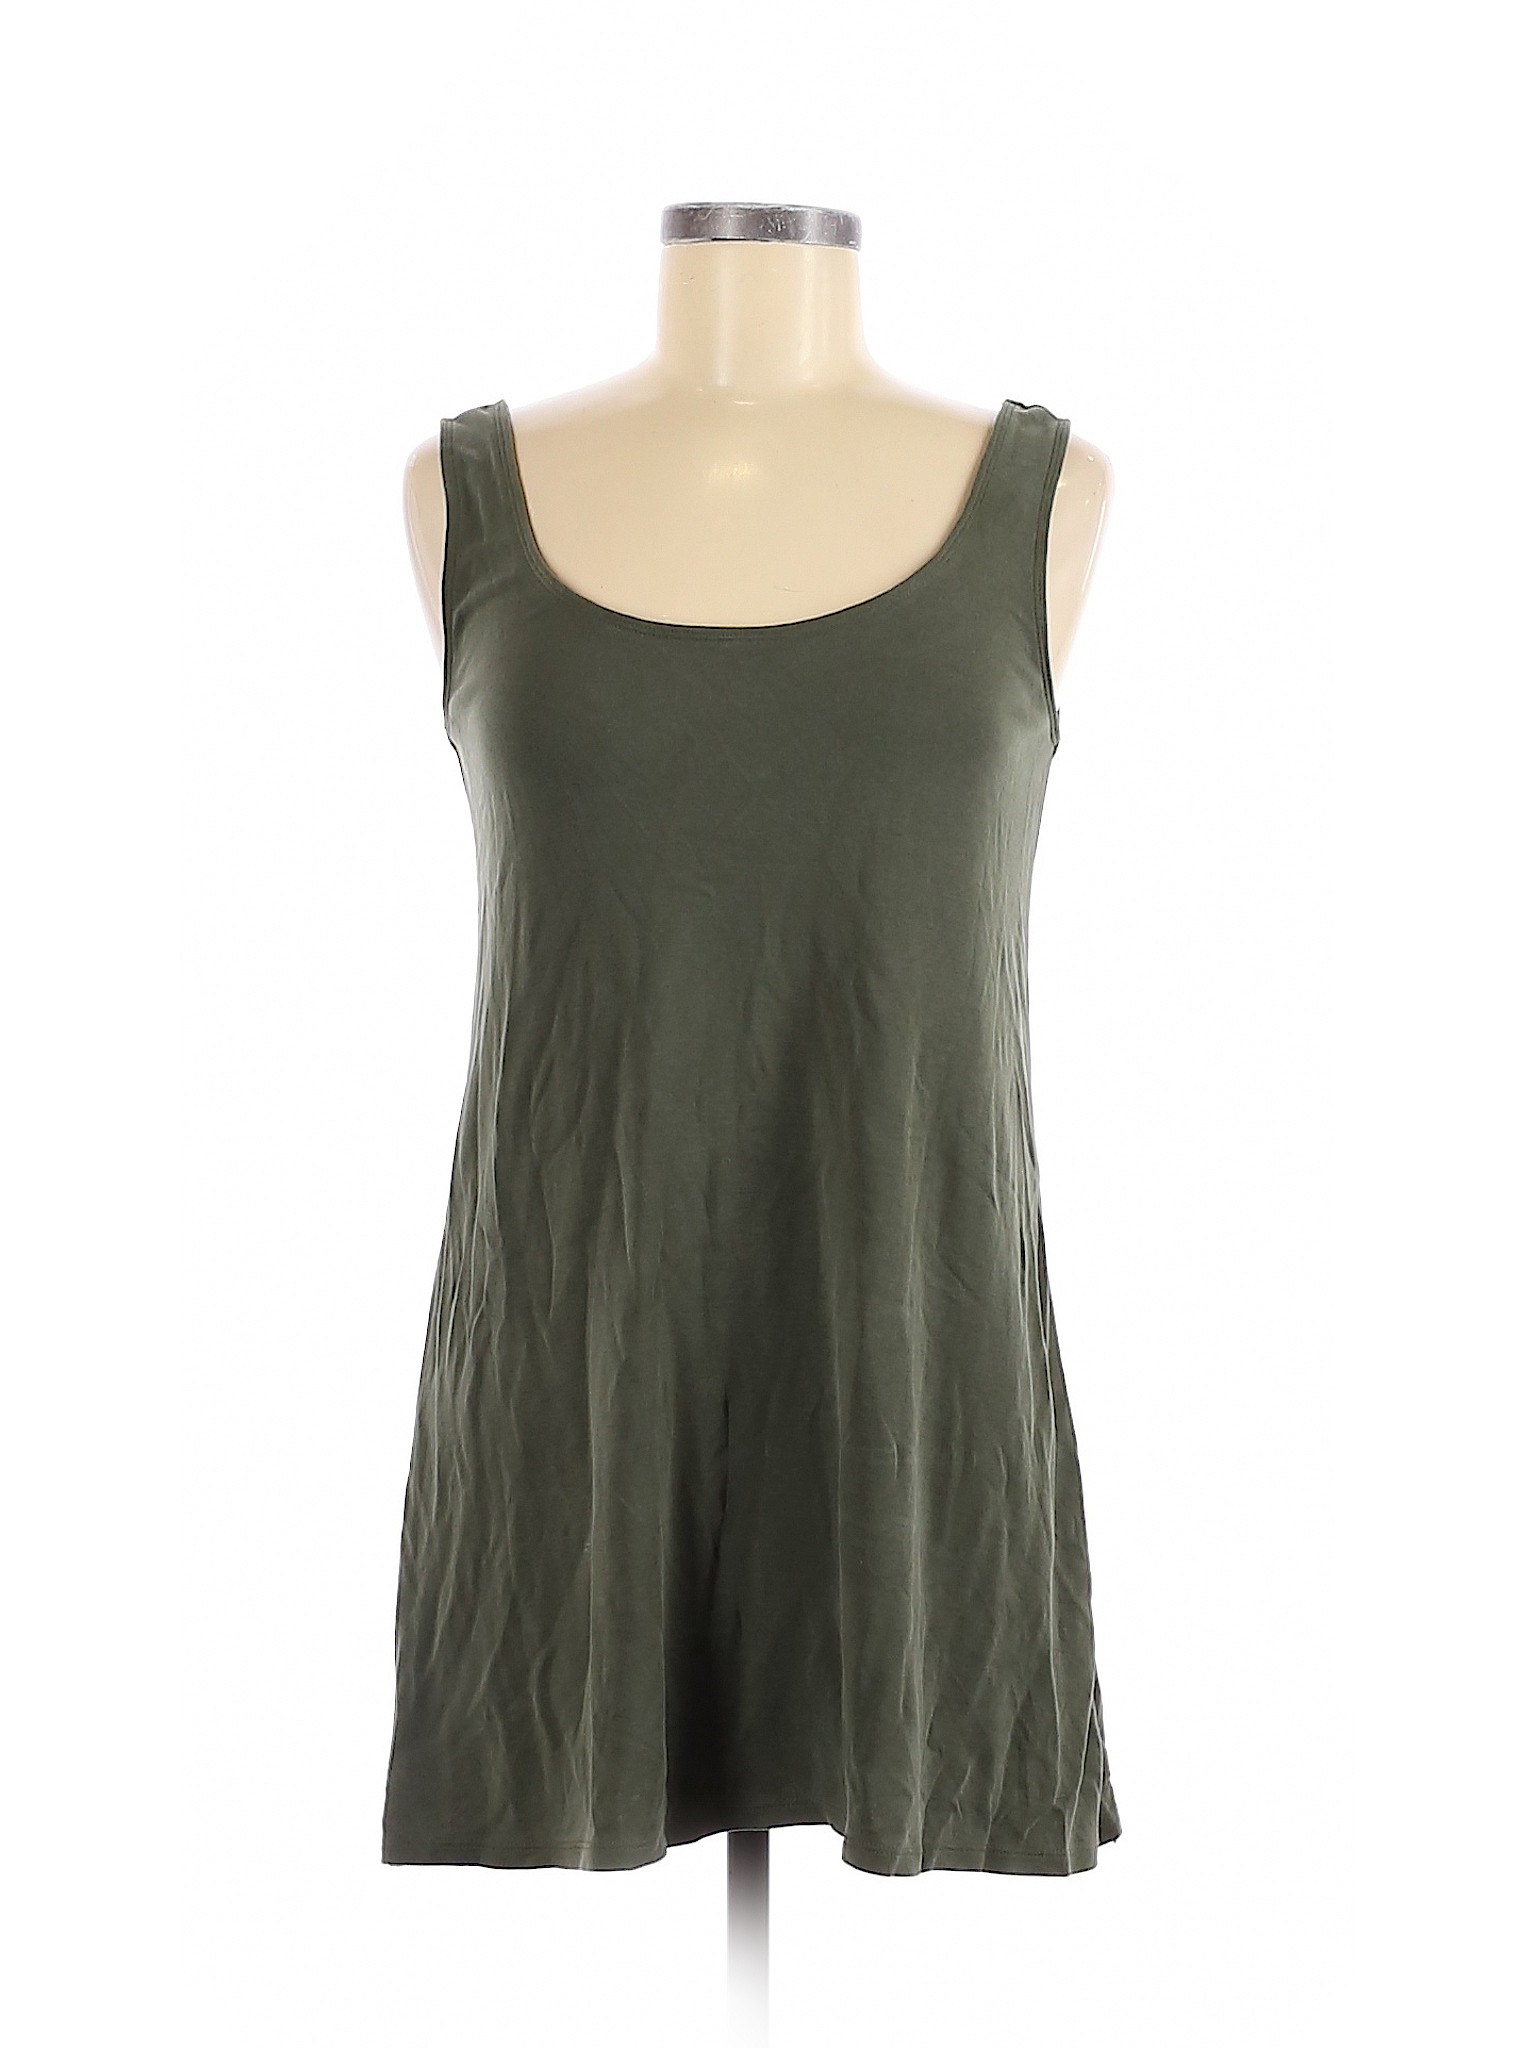 Abercrombie & Fitch Women Green Casual Dress XS Petites | eBay